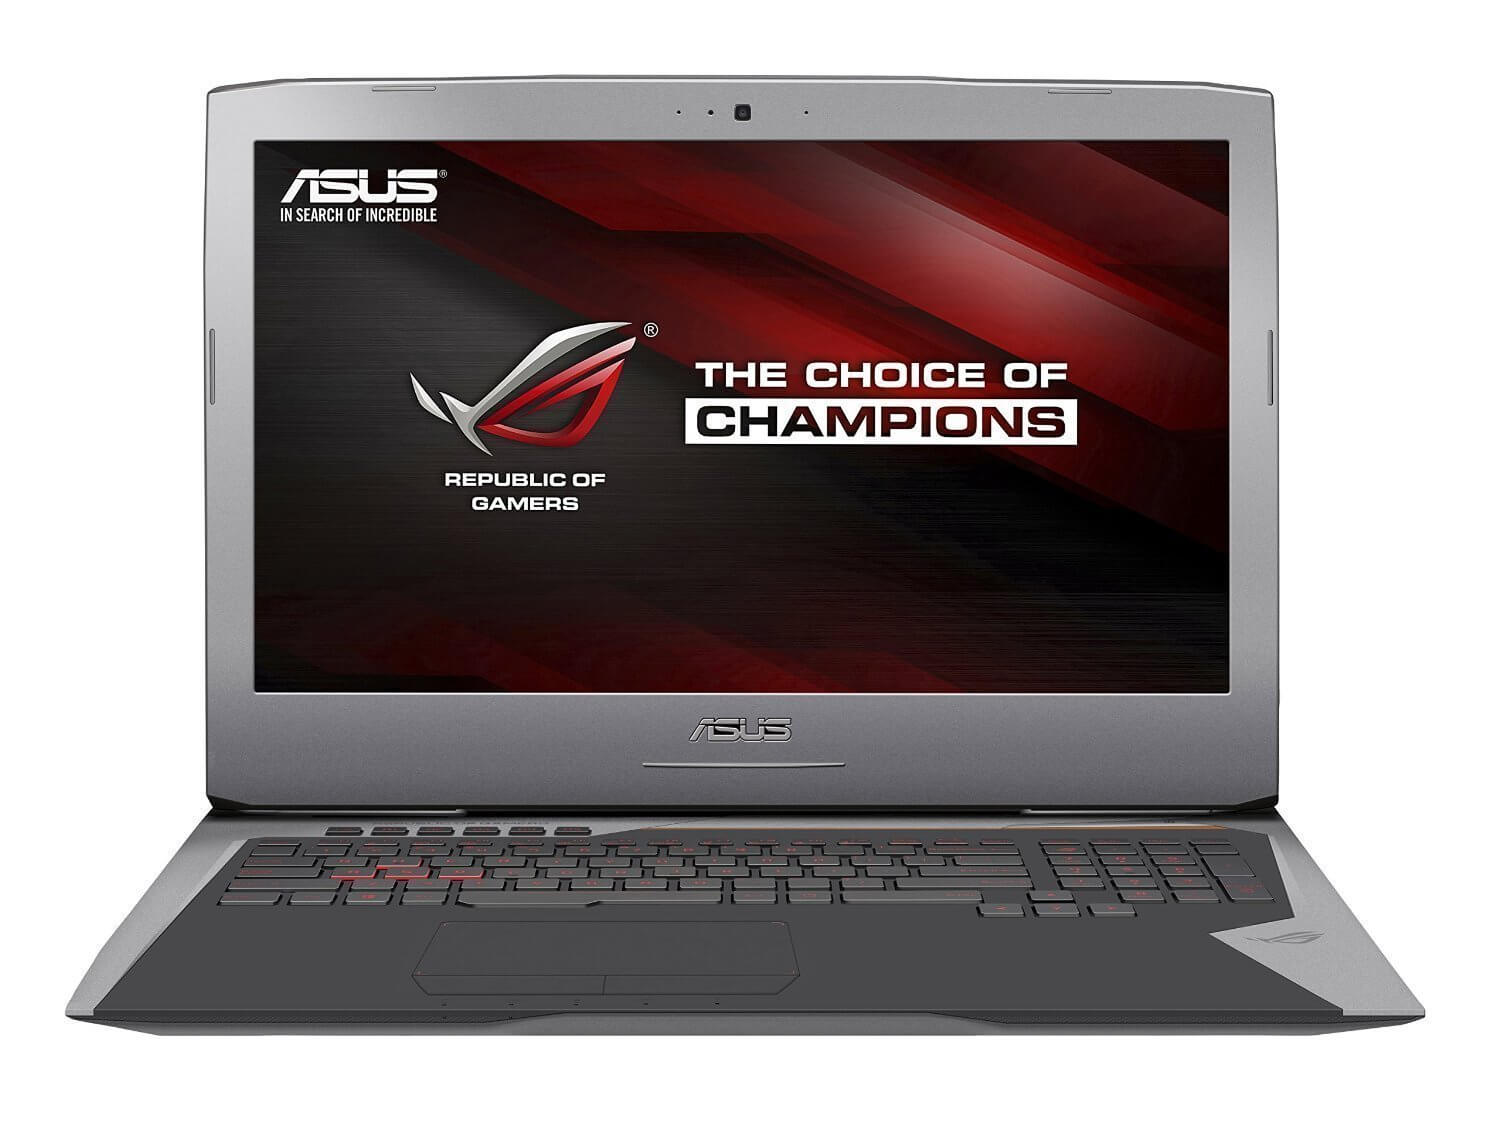 ASUS ROG G752VL-DH71 best Gaming Laptop Under 1500